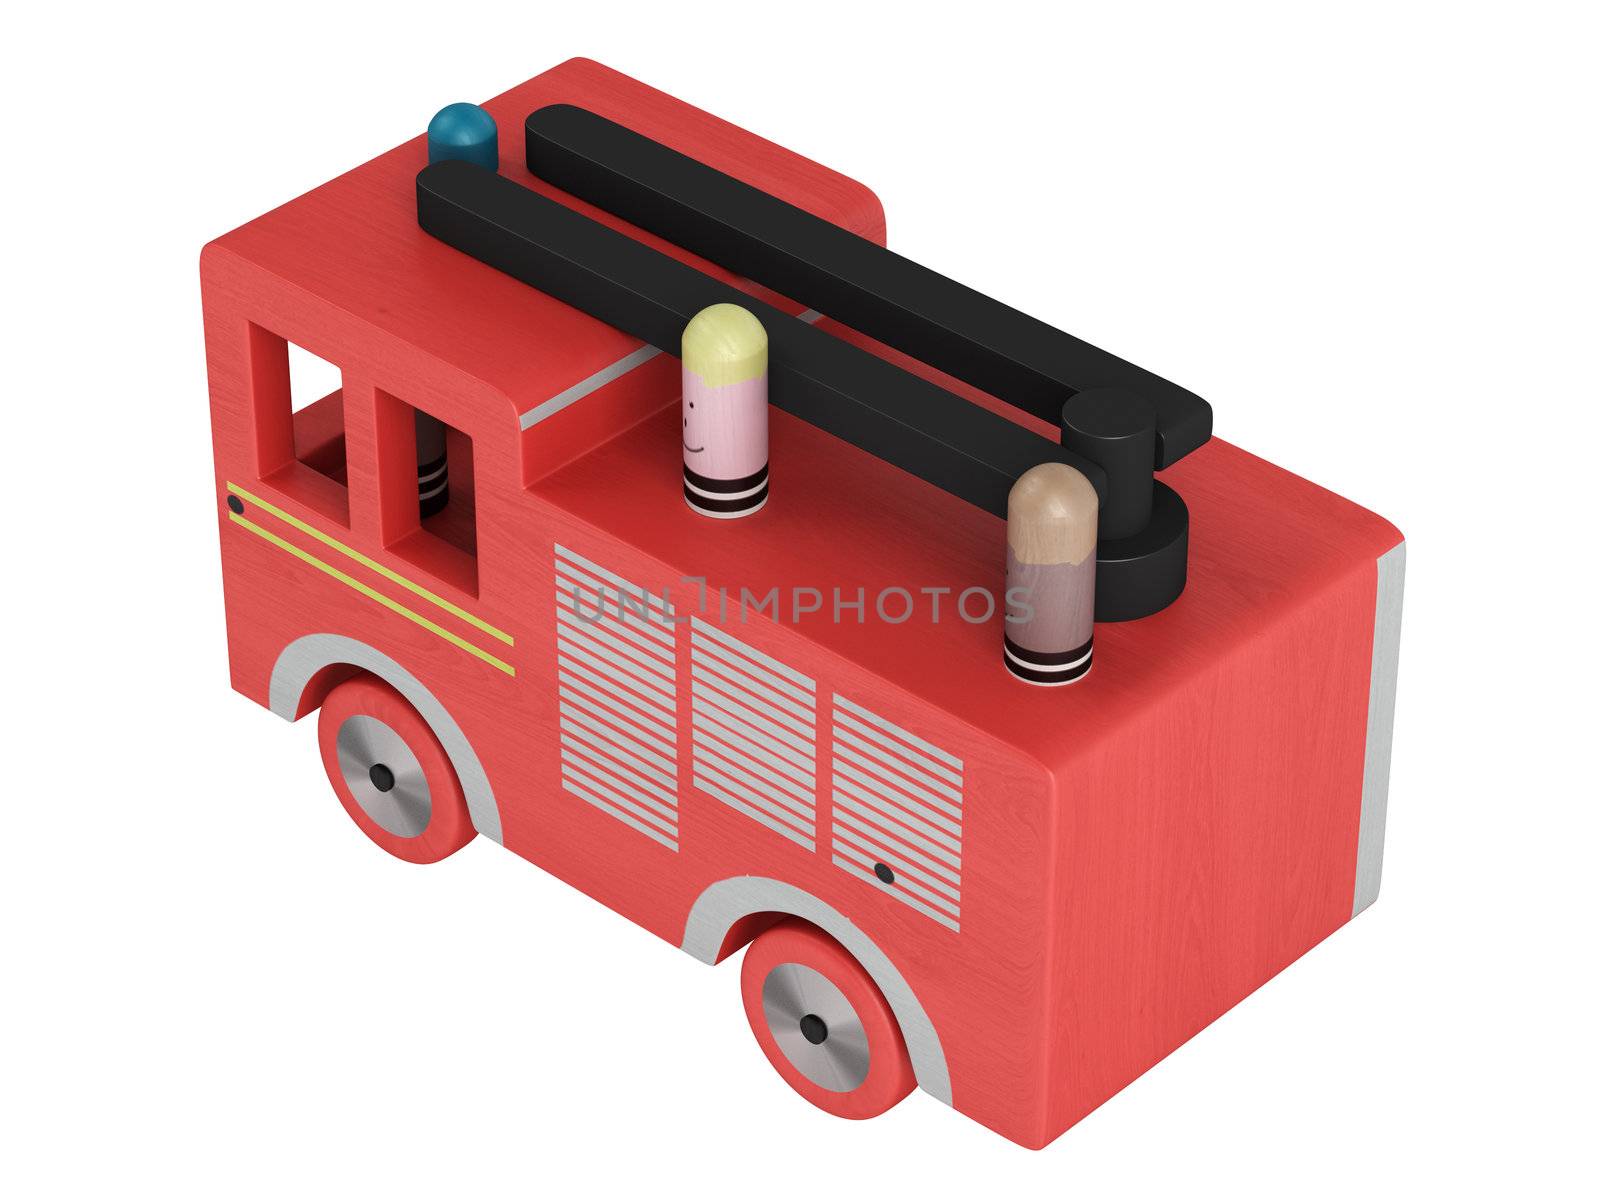 Fire truck toy by AlexanderMorozov